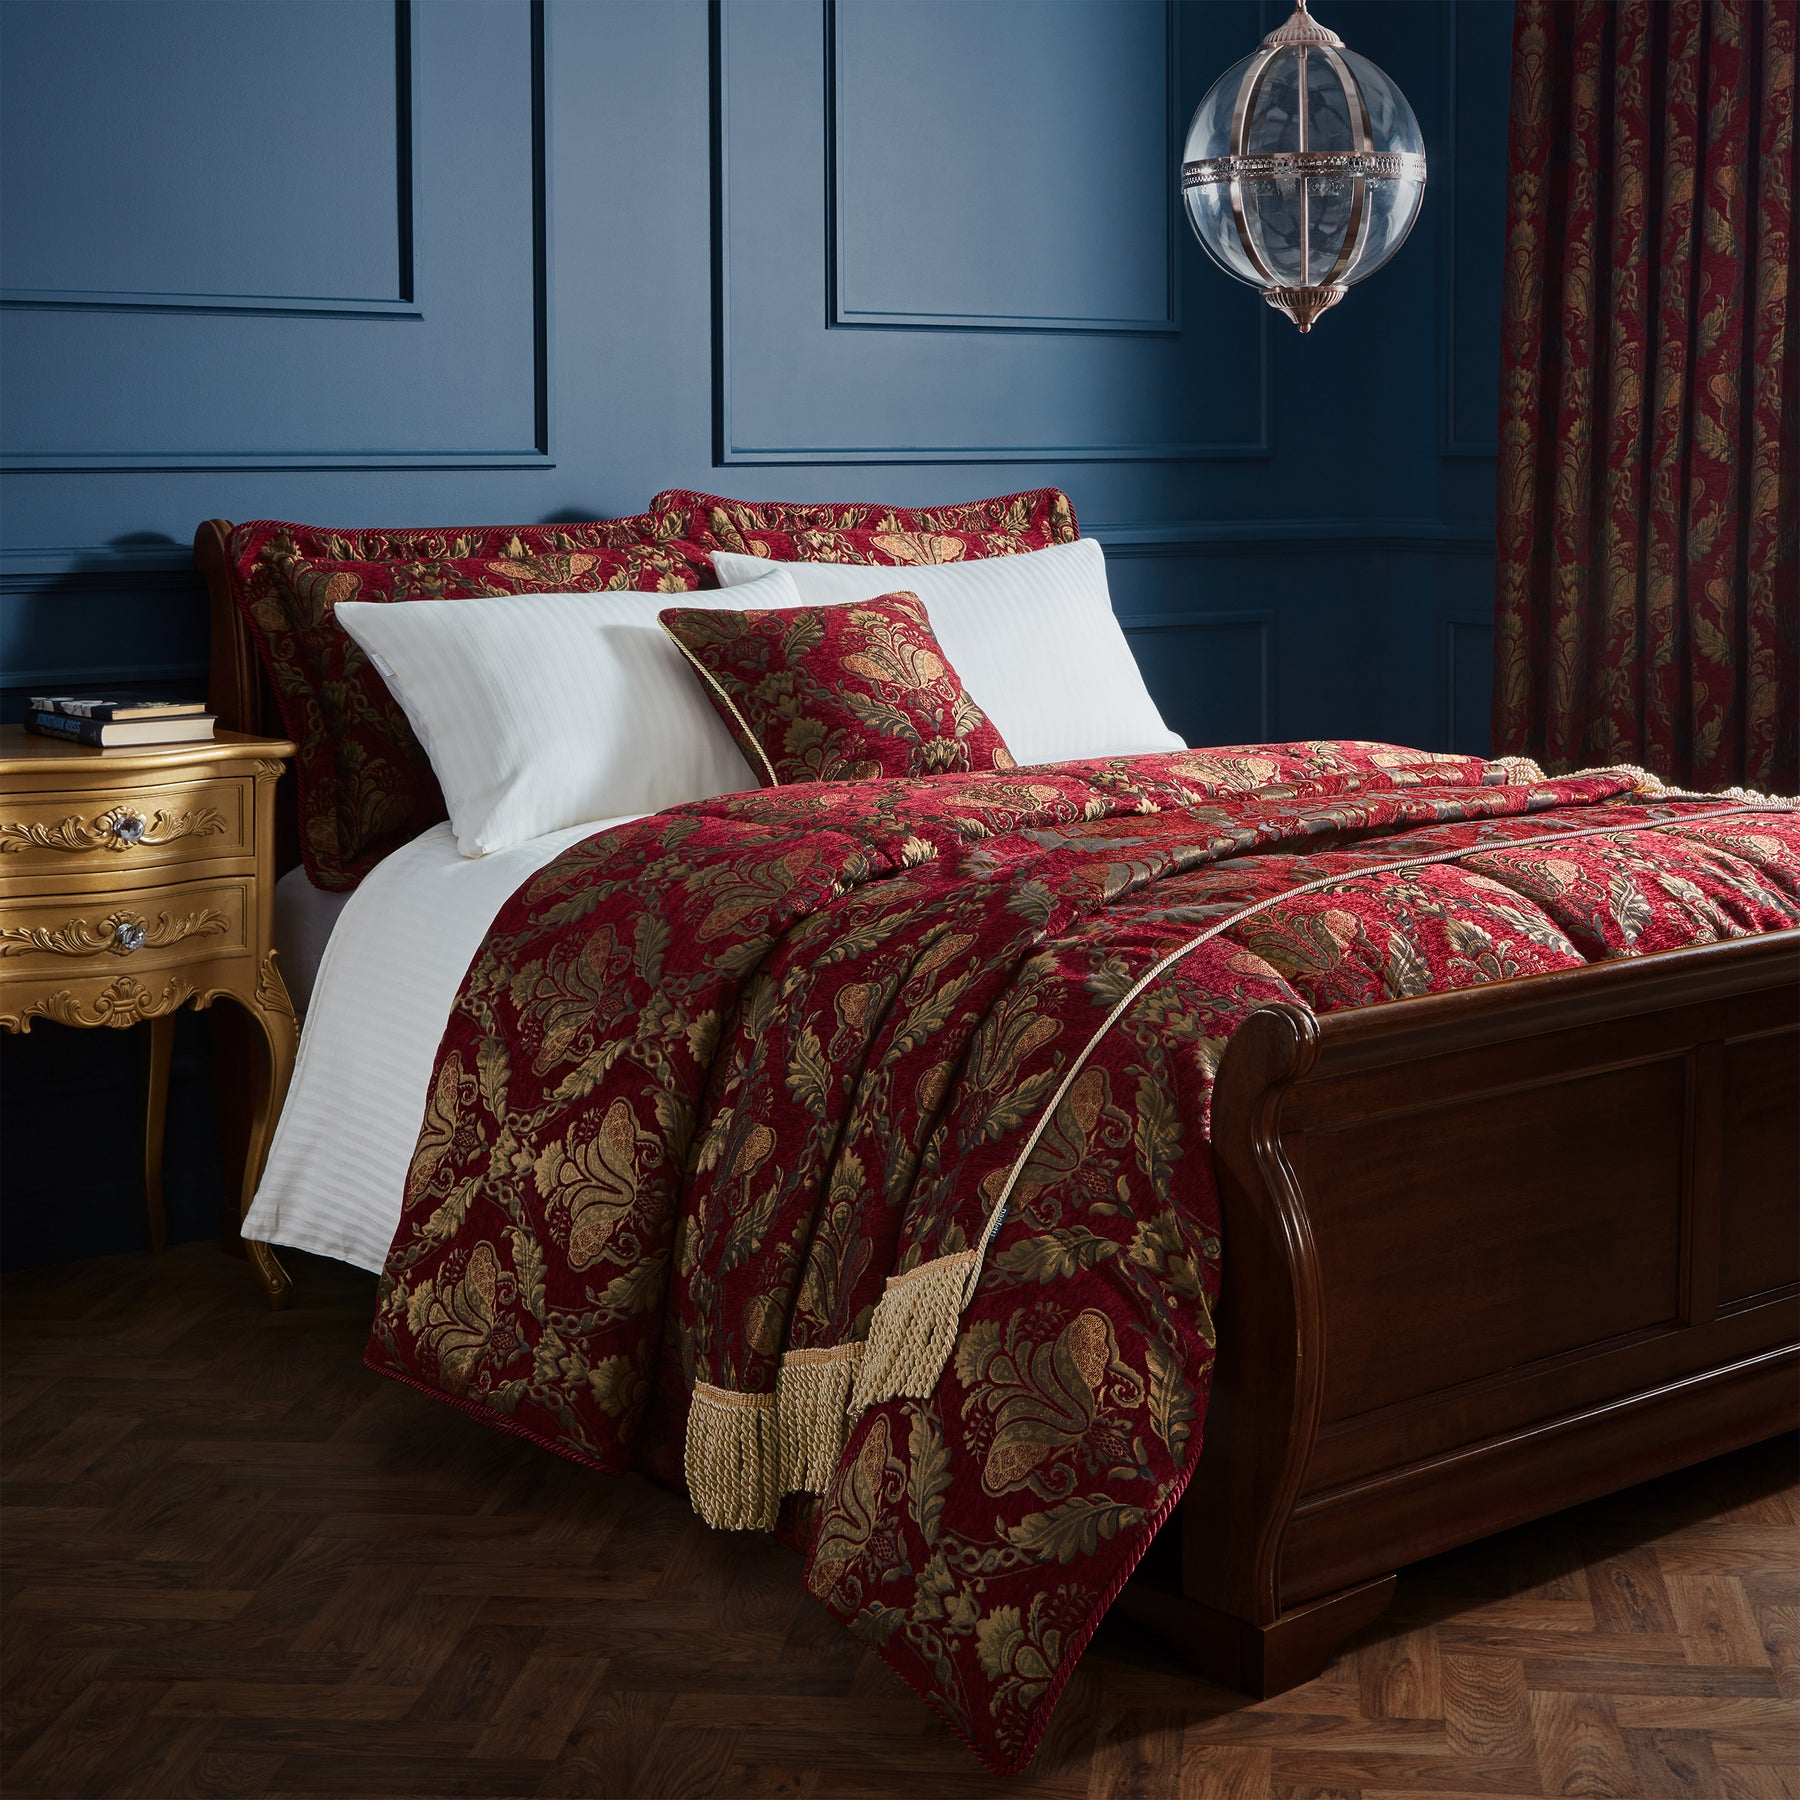 Shiraz Bedspread 275cm x 275cm Burgundy